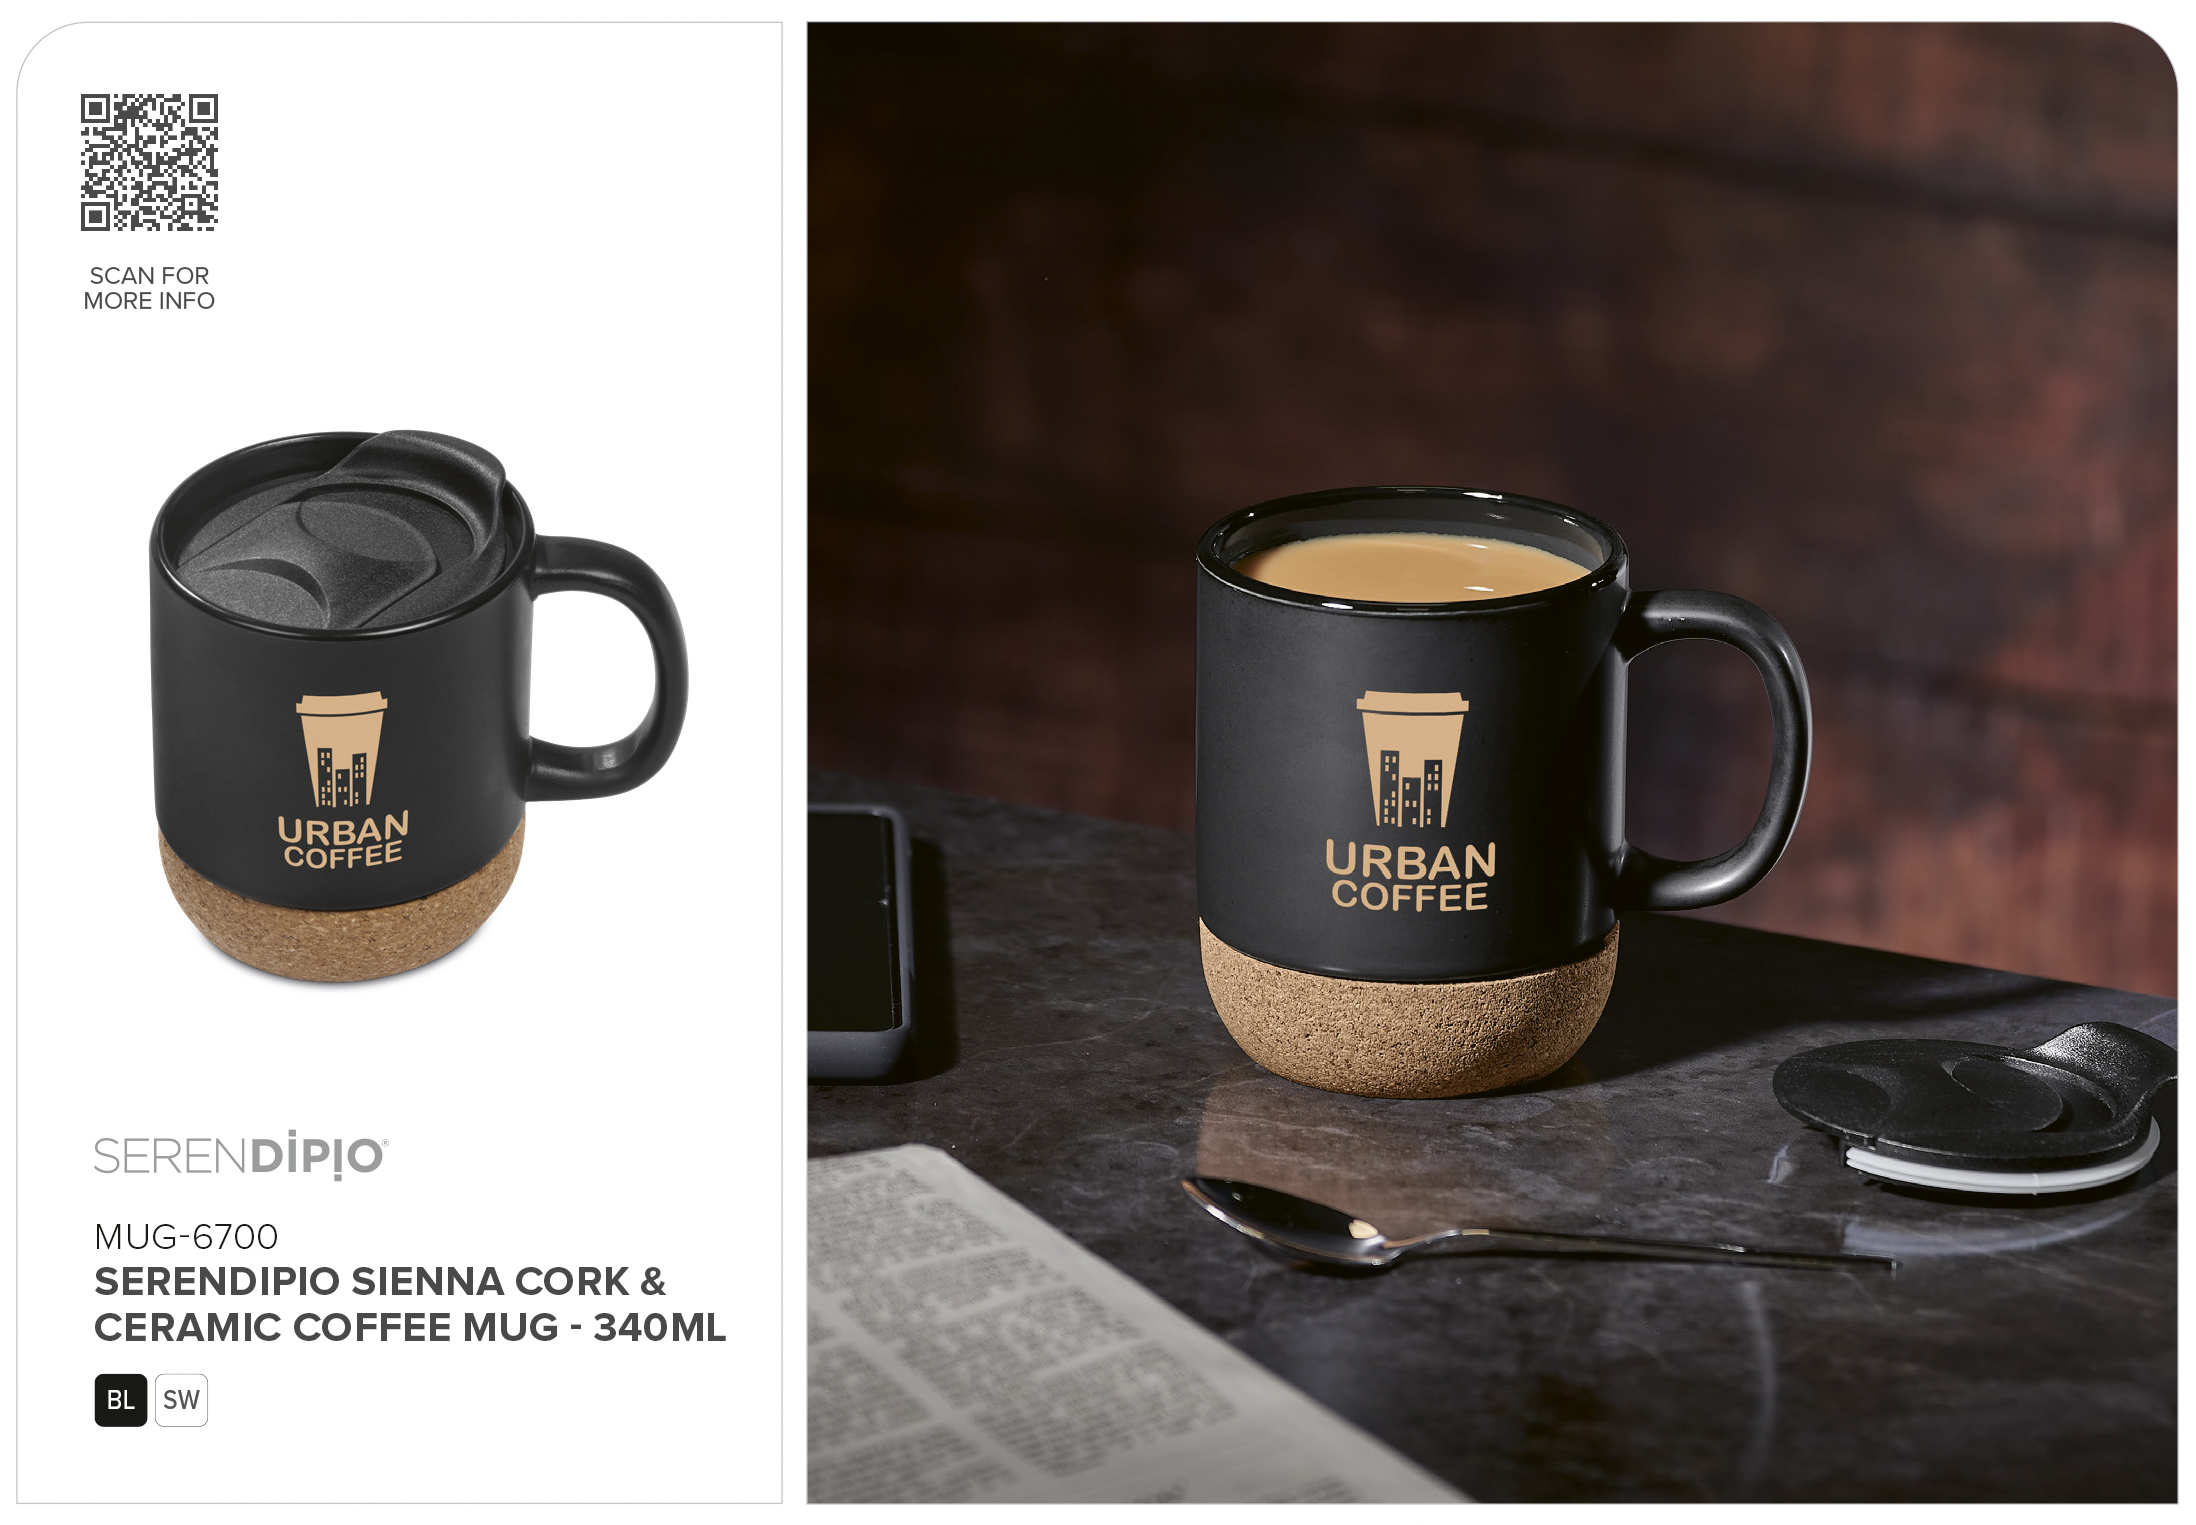 Serendipio Sienna Cork & Ceramic Coffee Mug - 340ml CATALOGUE_IMAGE